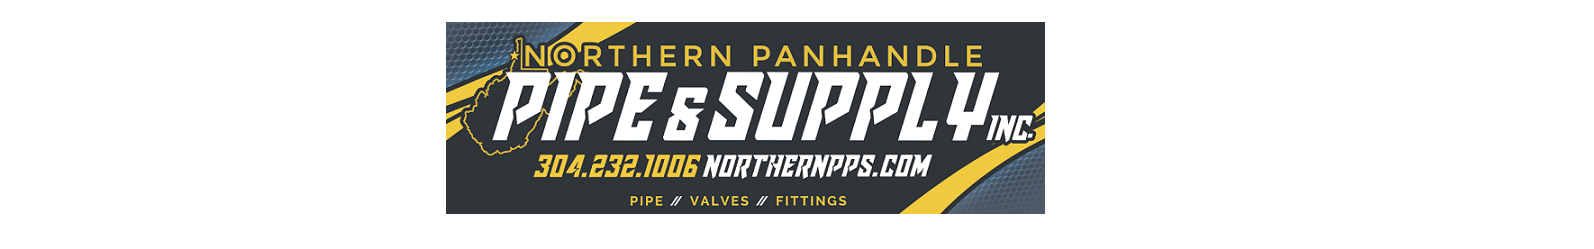 Northern Panhandle Pipe & Supply, Inc. logo